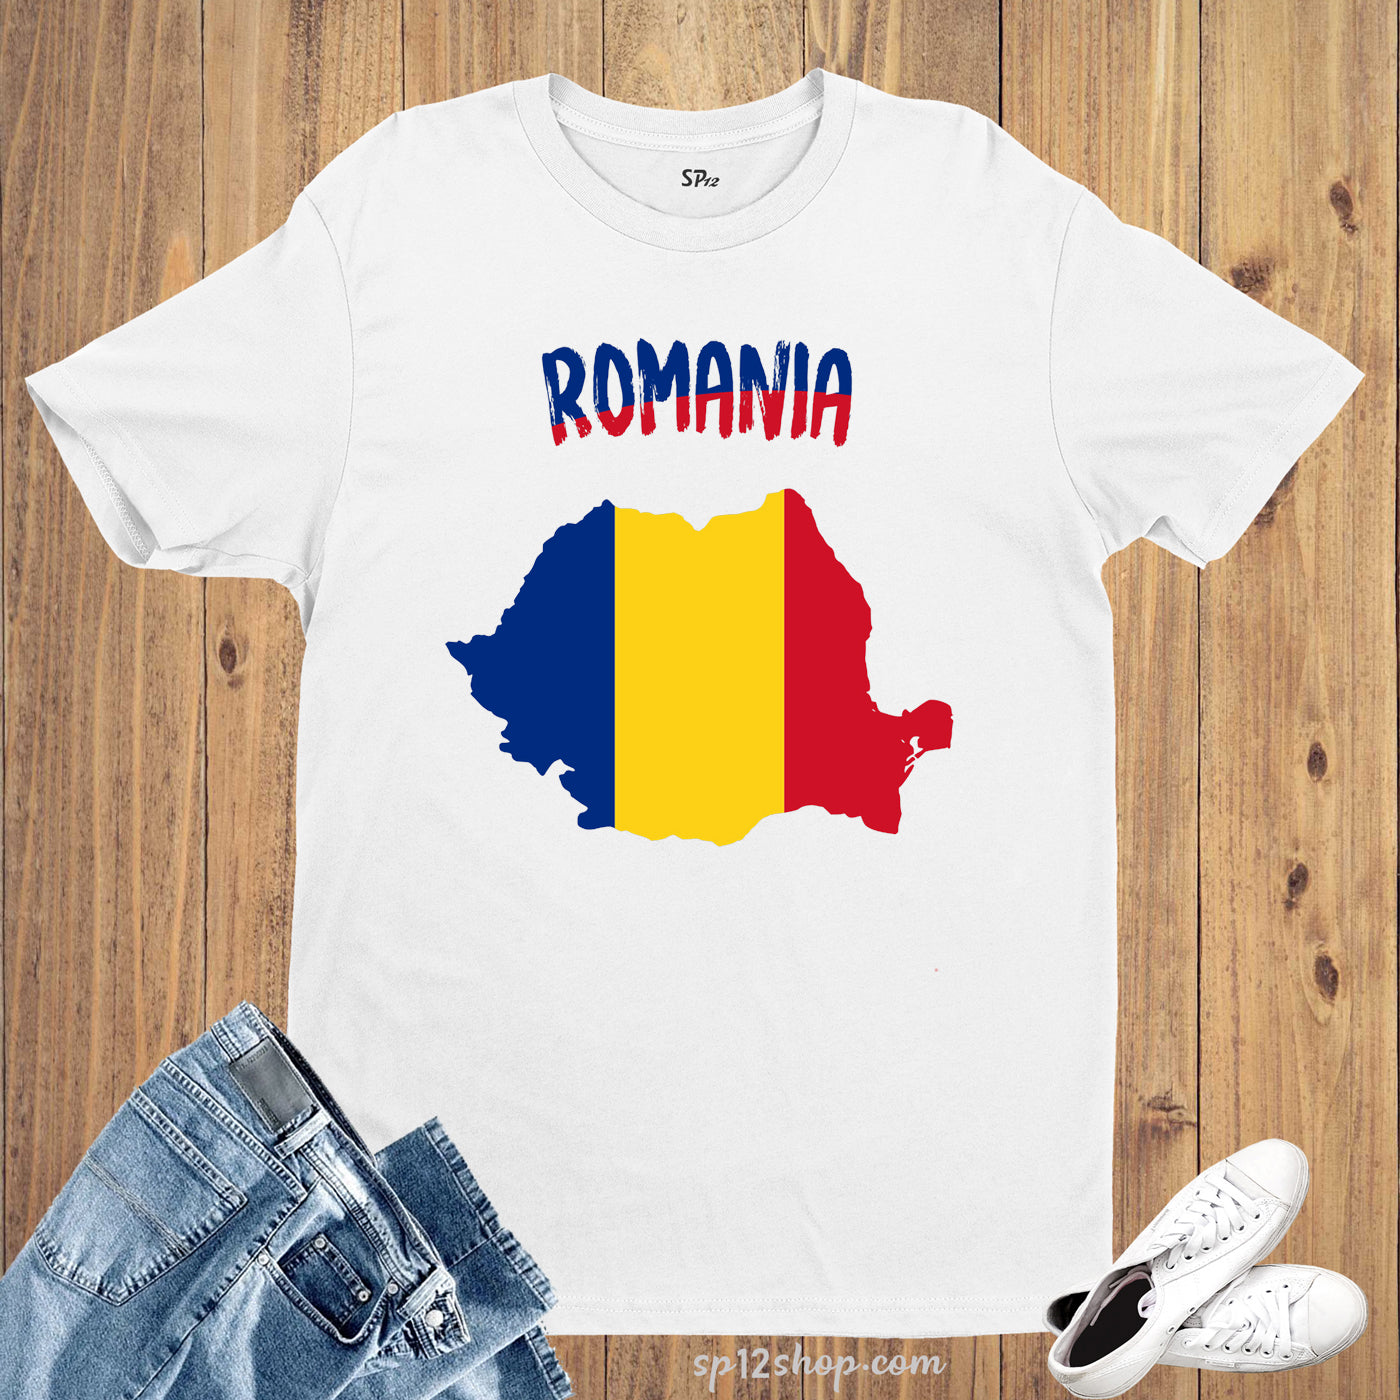 Romania Flag T Shirt Olympics FIFA World Cup Country Flag Tee Shirt